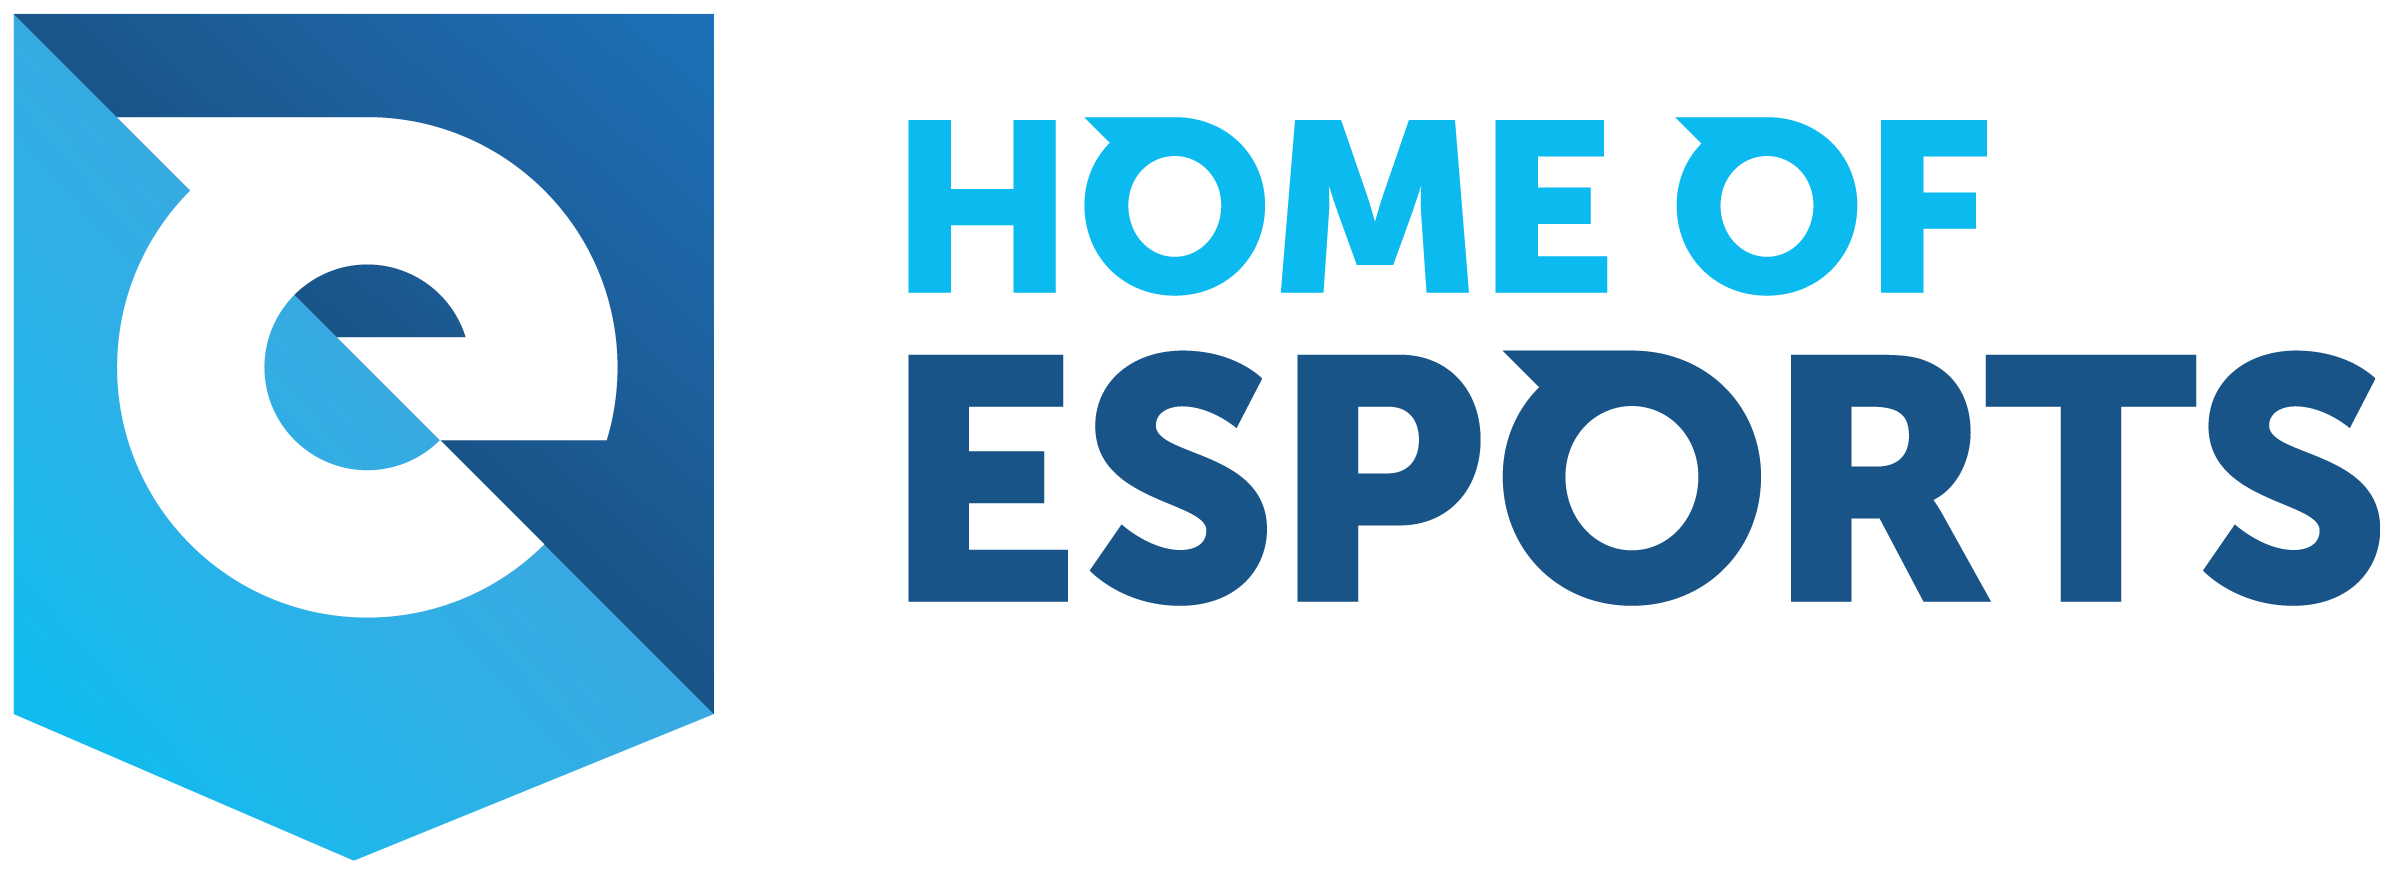 Home of esports logo